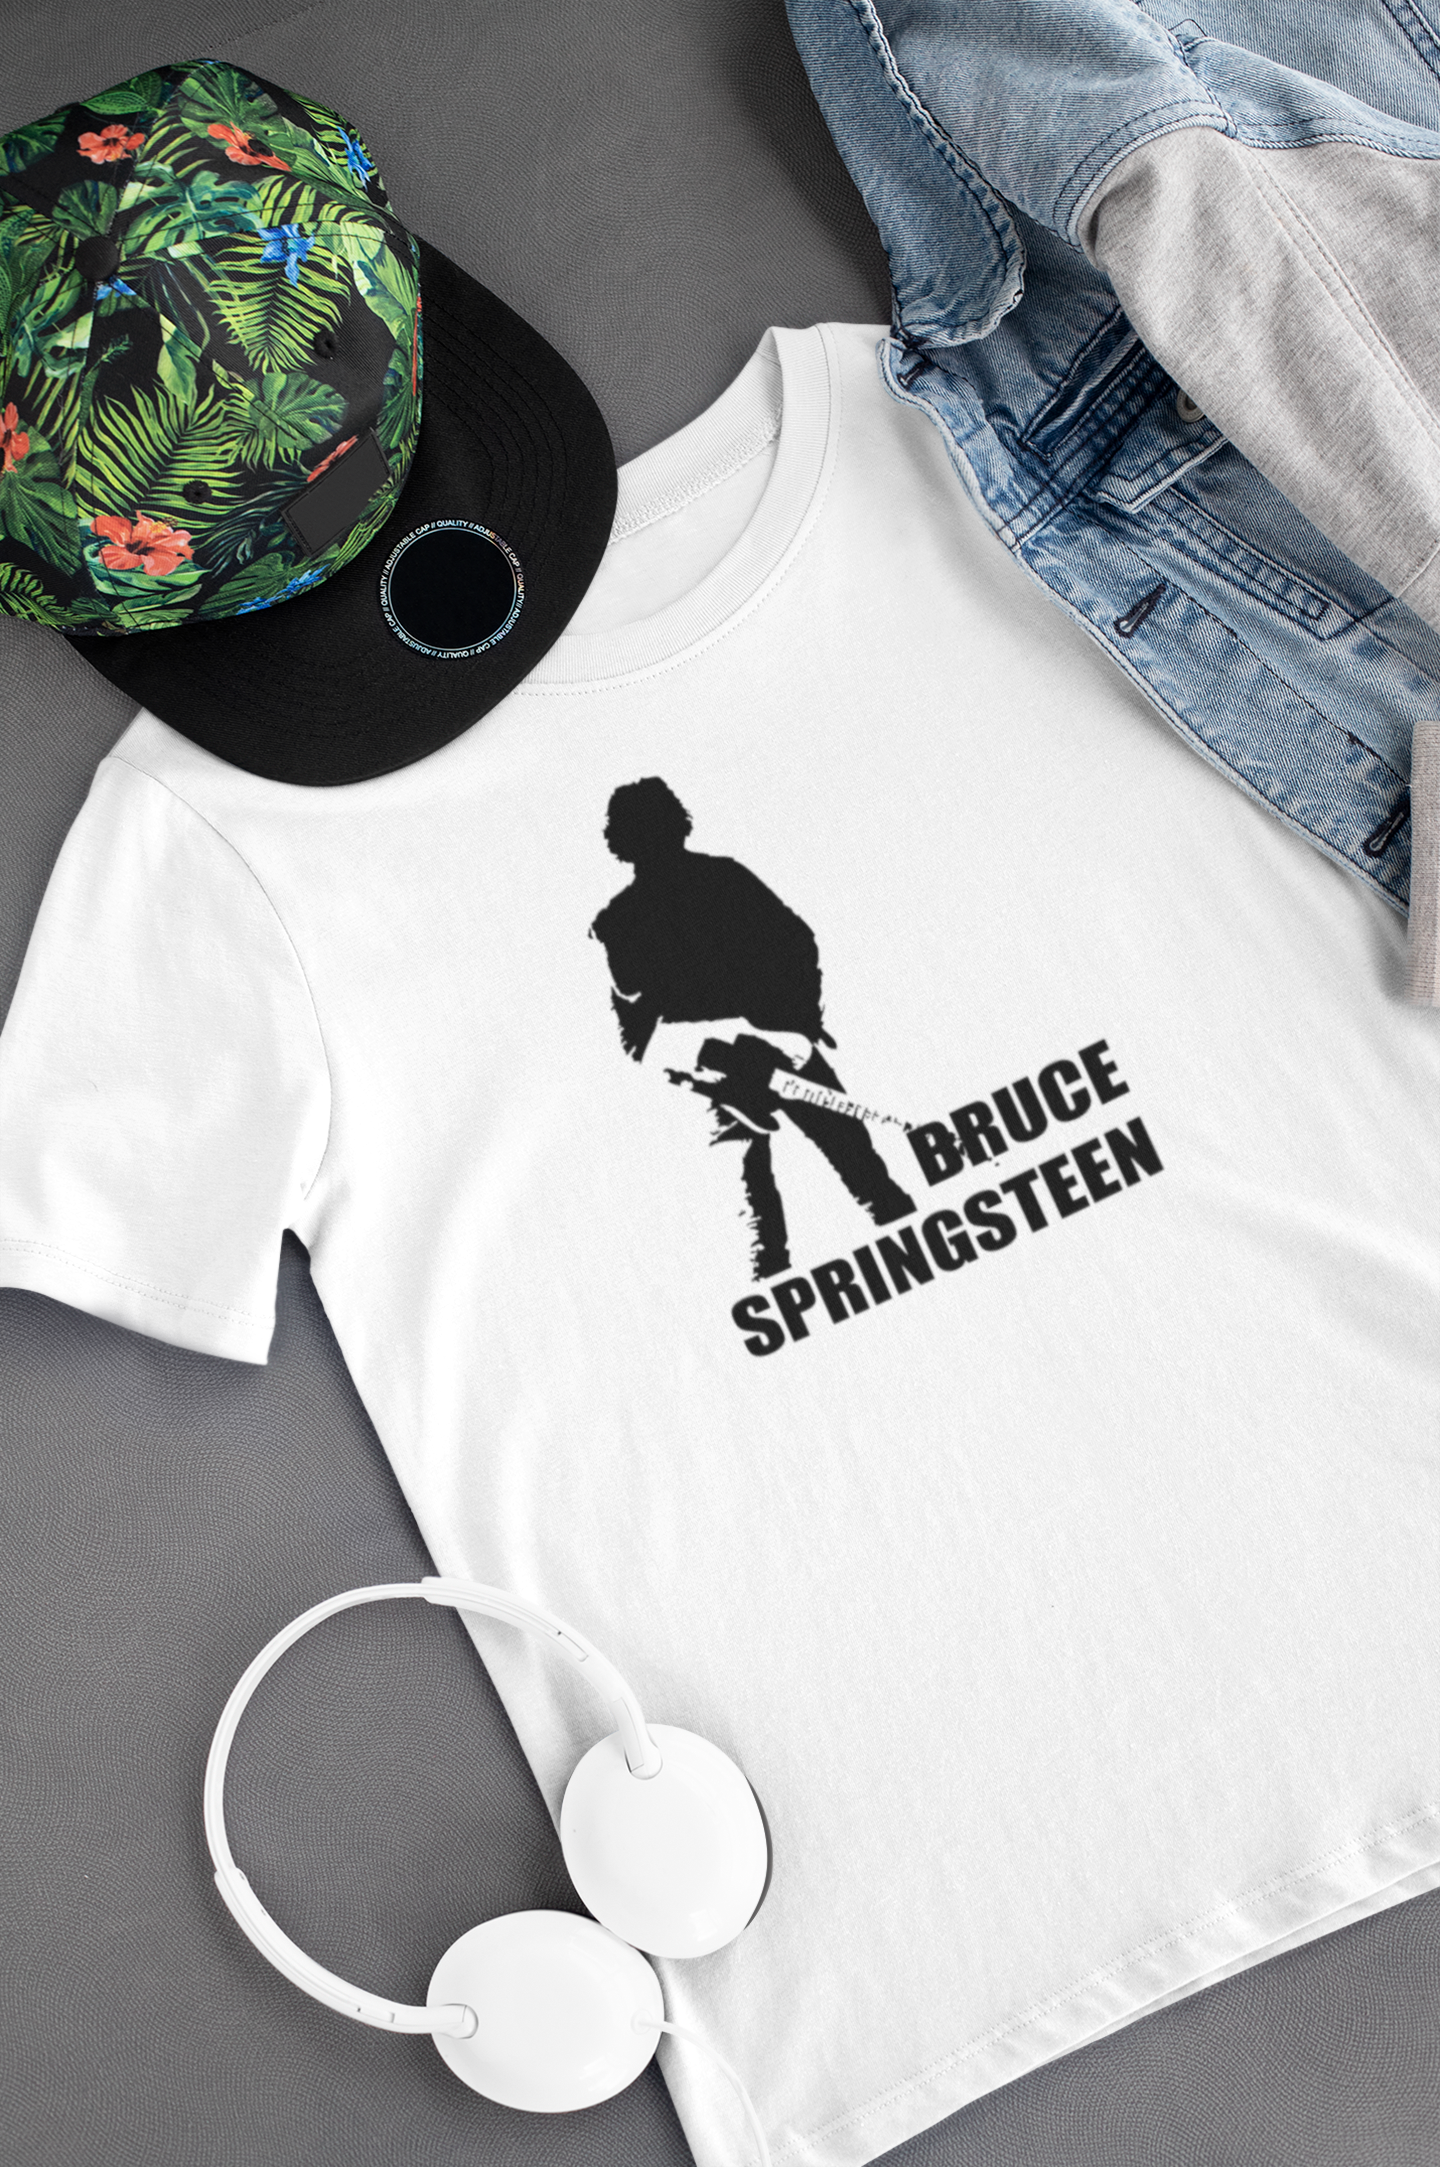 Camiseta "Bruce Springsteen" - Música